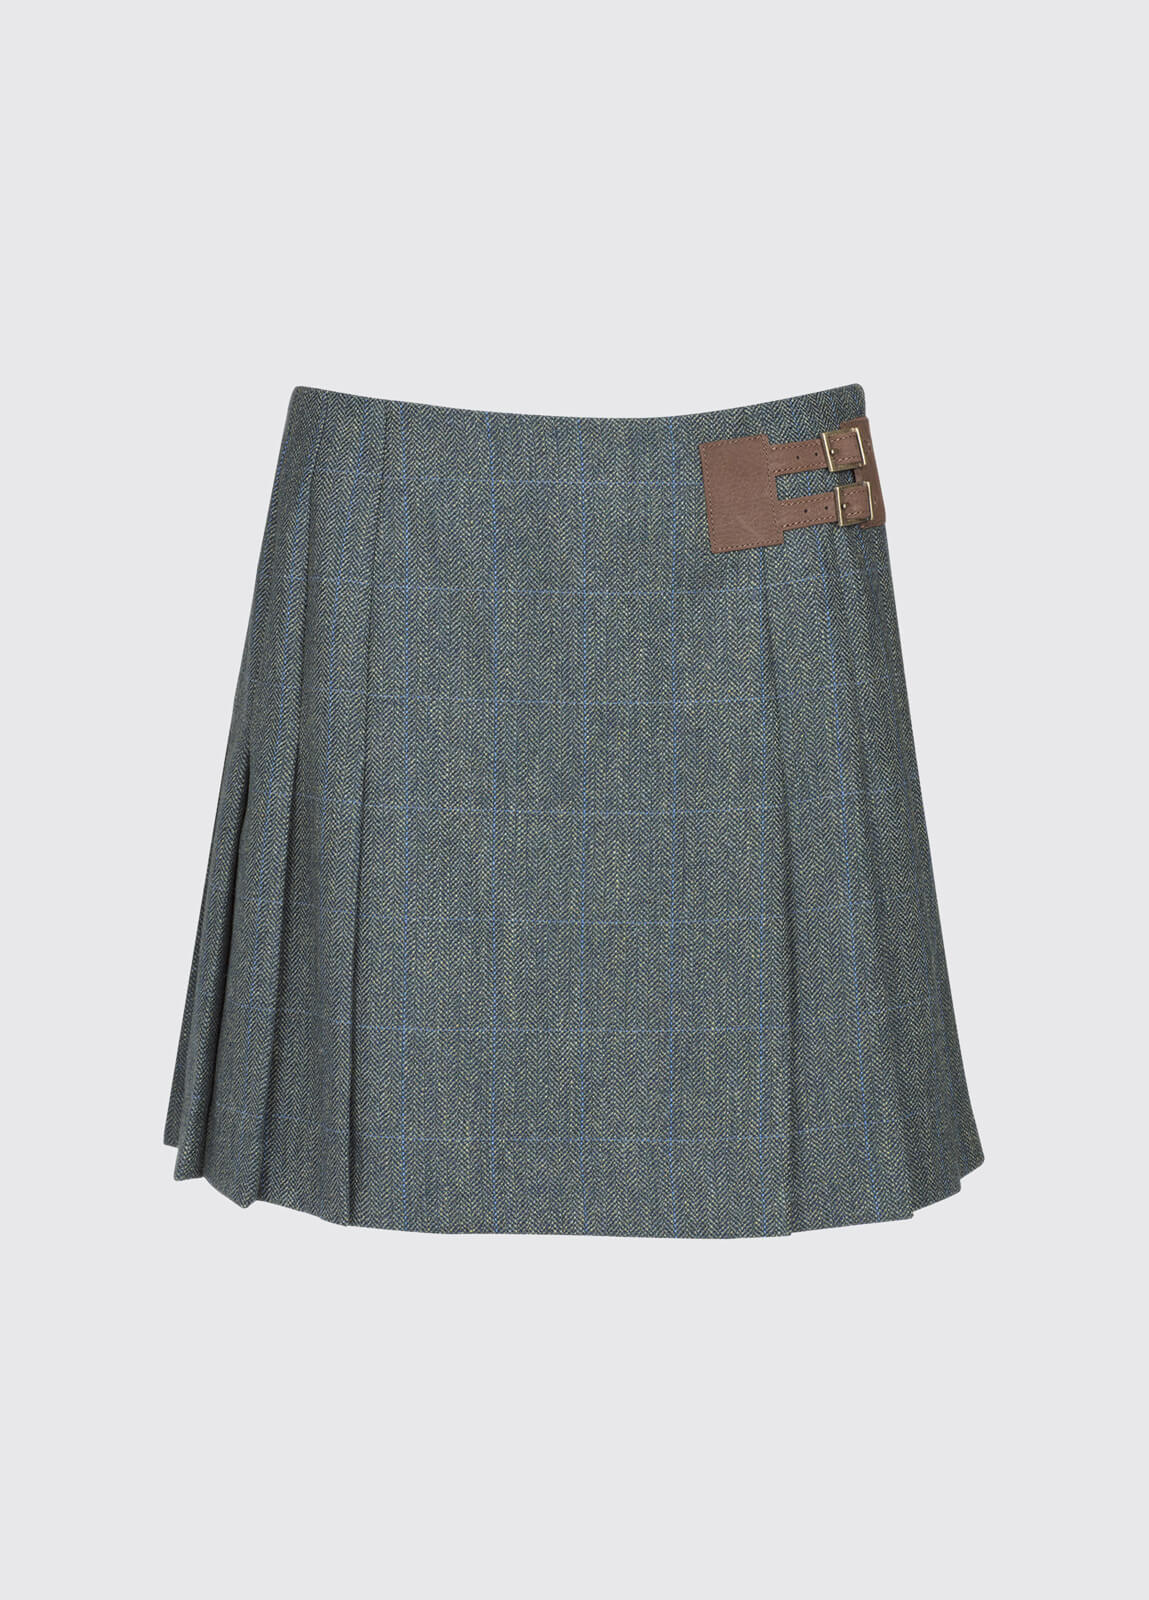 Foxglove Tweed Skirt - Mist